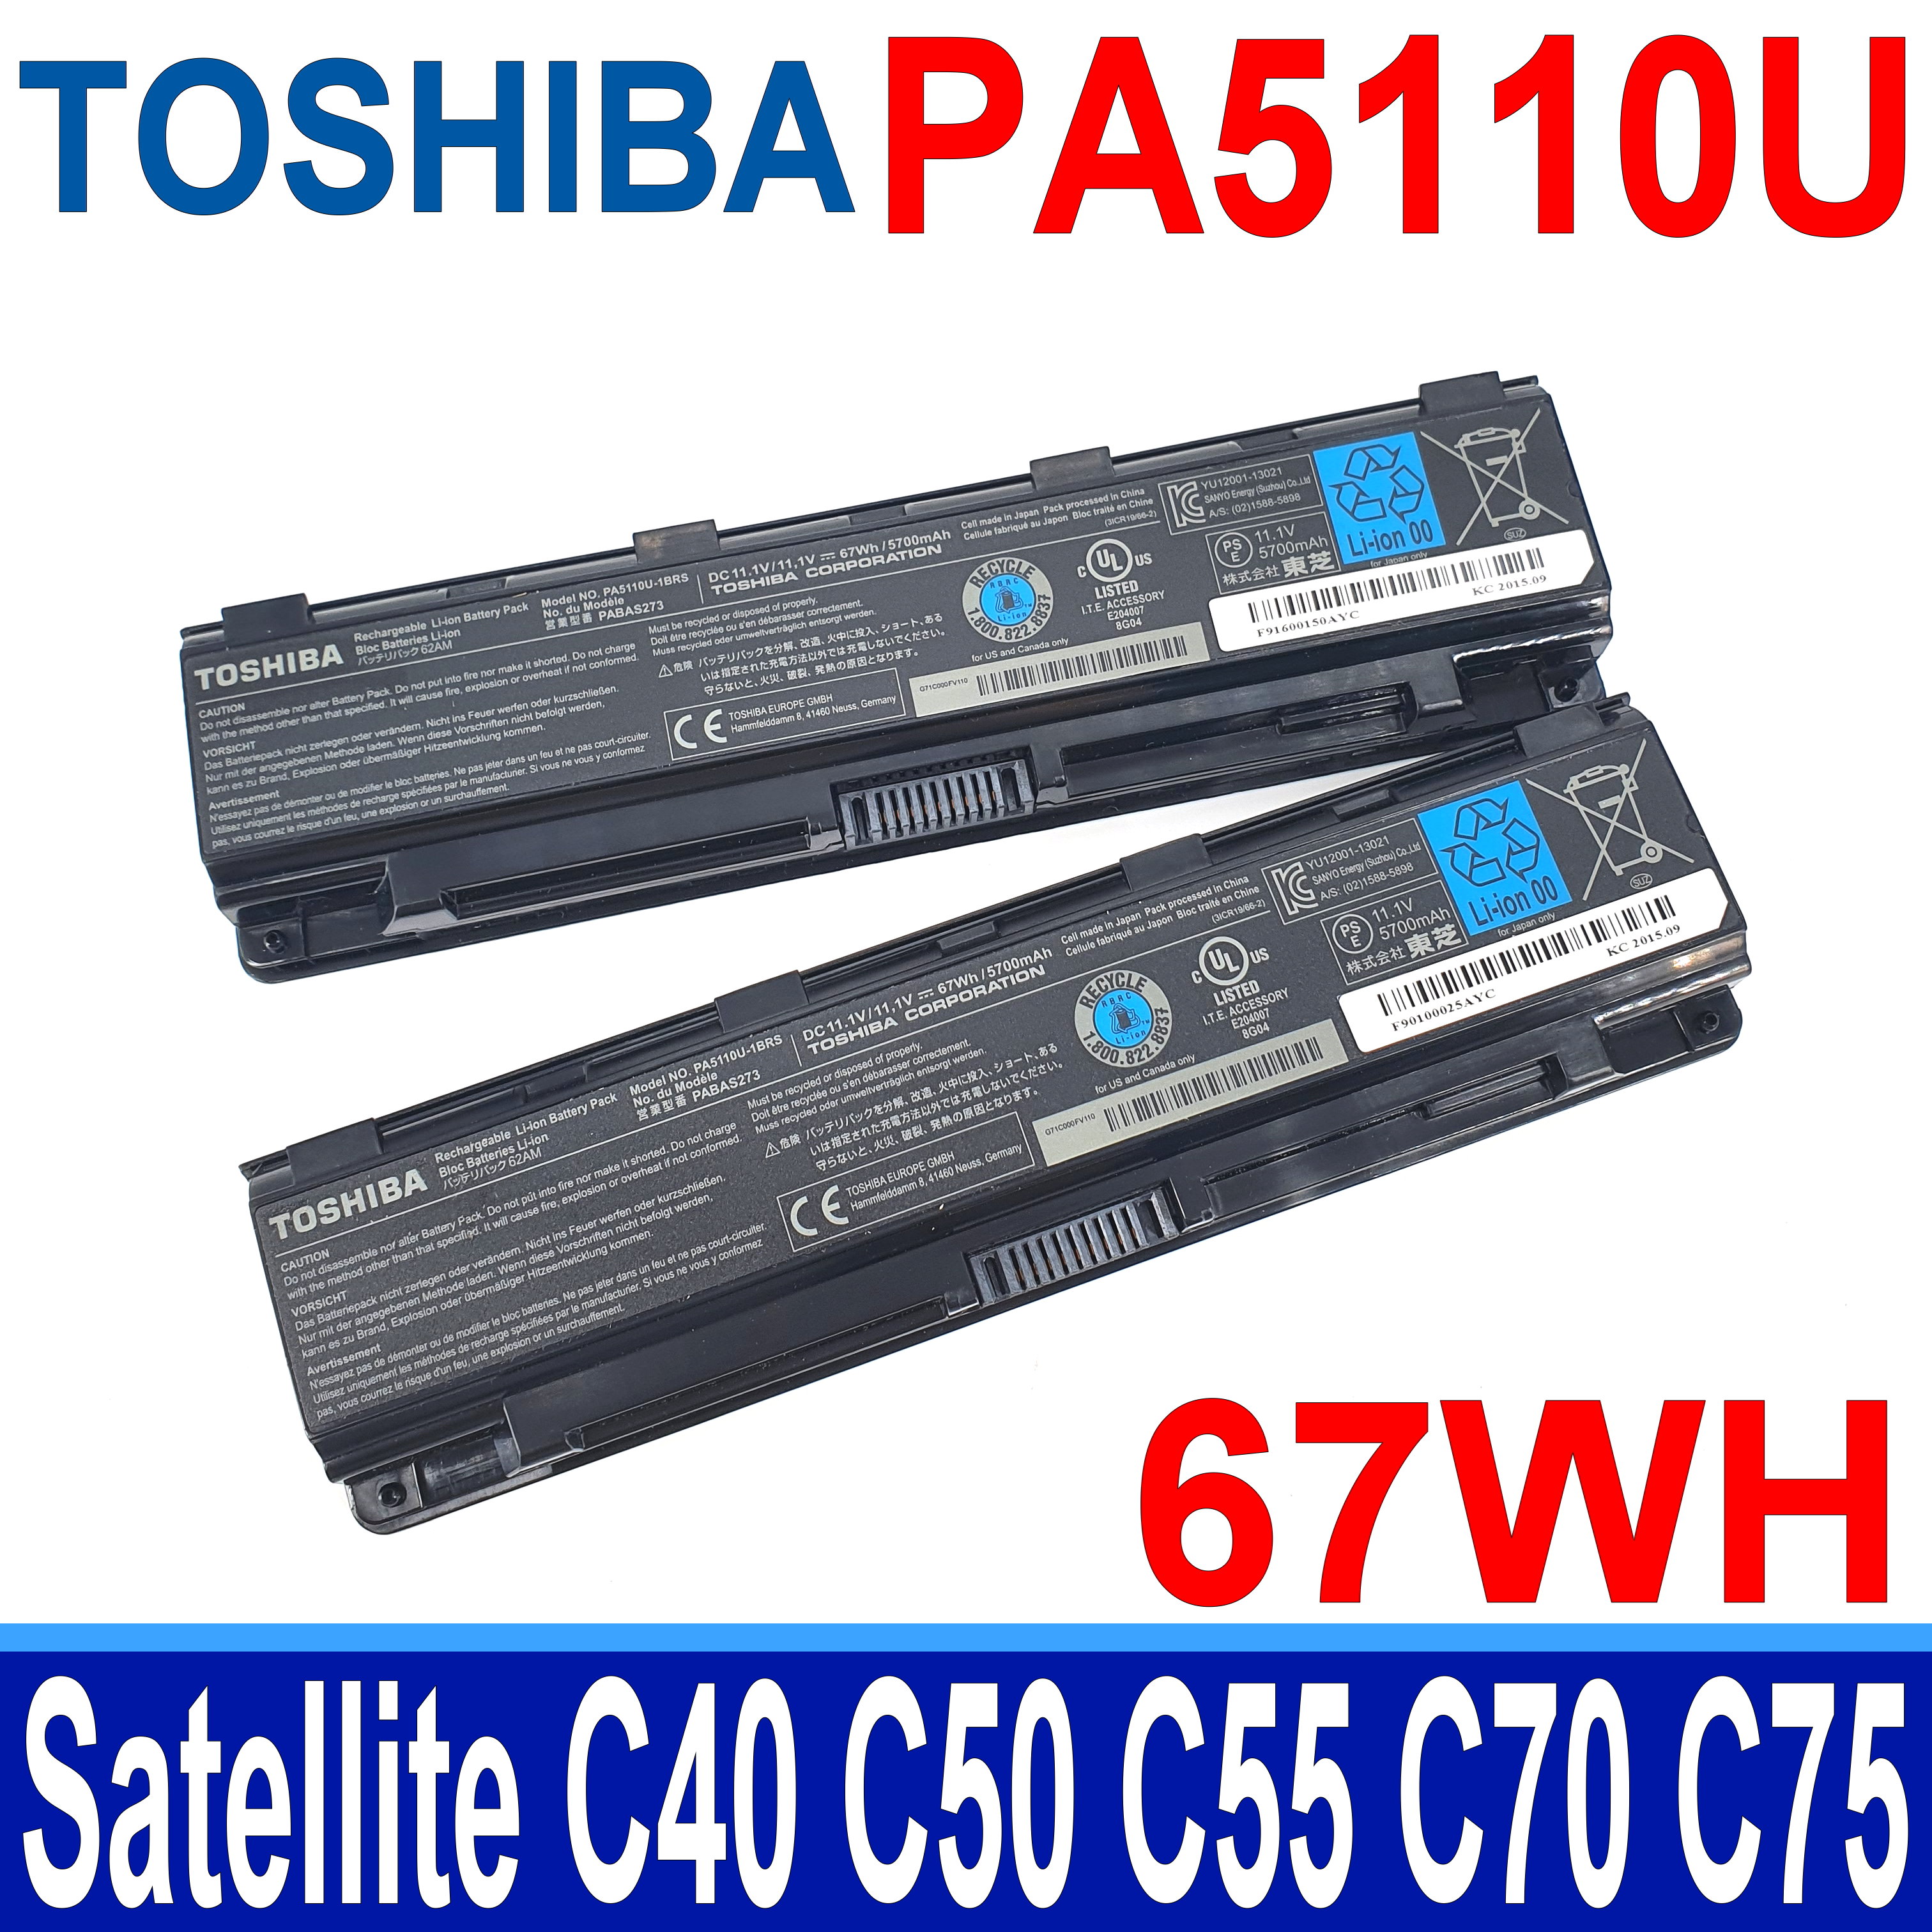 TOSHIBA PA5110U 原廠電池 C75 C75-A C75-B C75D C75D-A C75D-B S70T S70D-B S70DT-A S70DT-B S75DT-B S75D-B S70DT S75D S70DT S70-A S70-B S70D-A A50 S70T-A S70T-B S75-A S75-B S75DT-A S75T S75T-B TECRA A50-A W50 W50-A